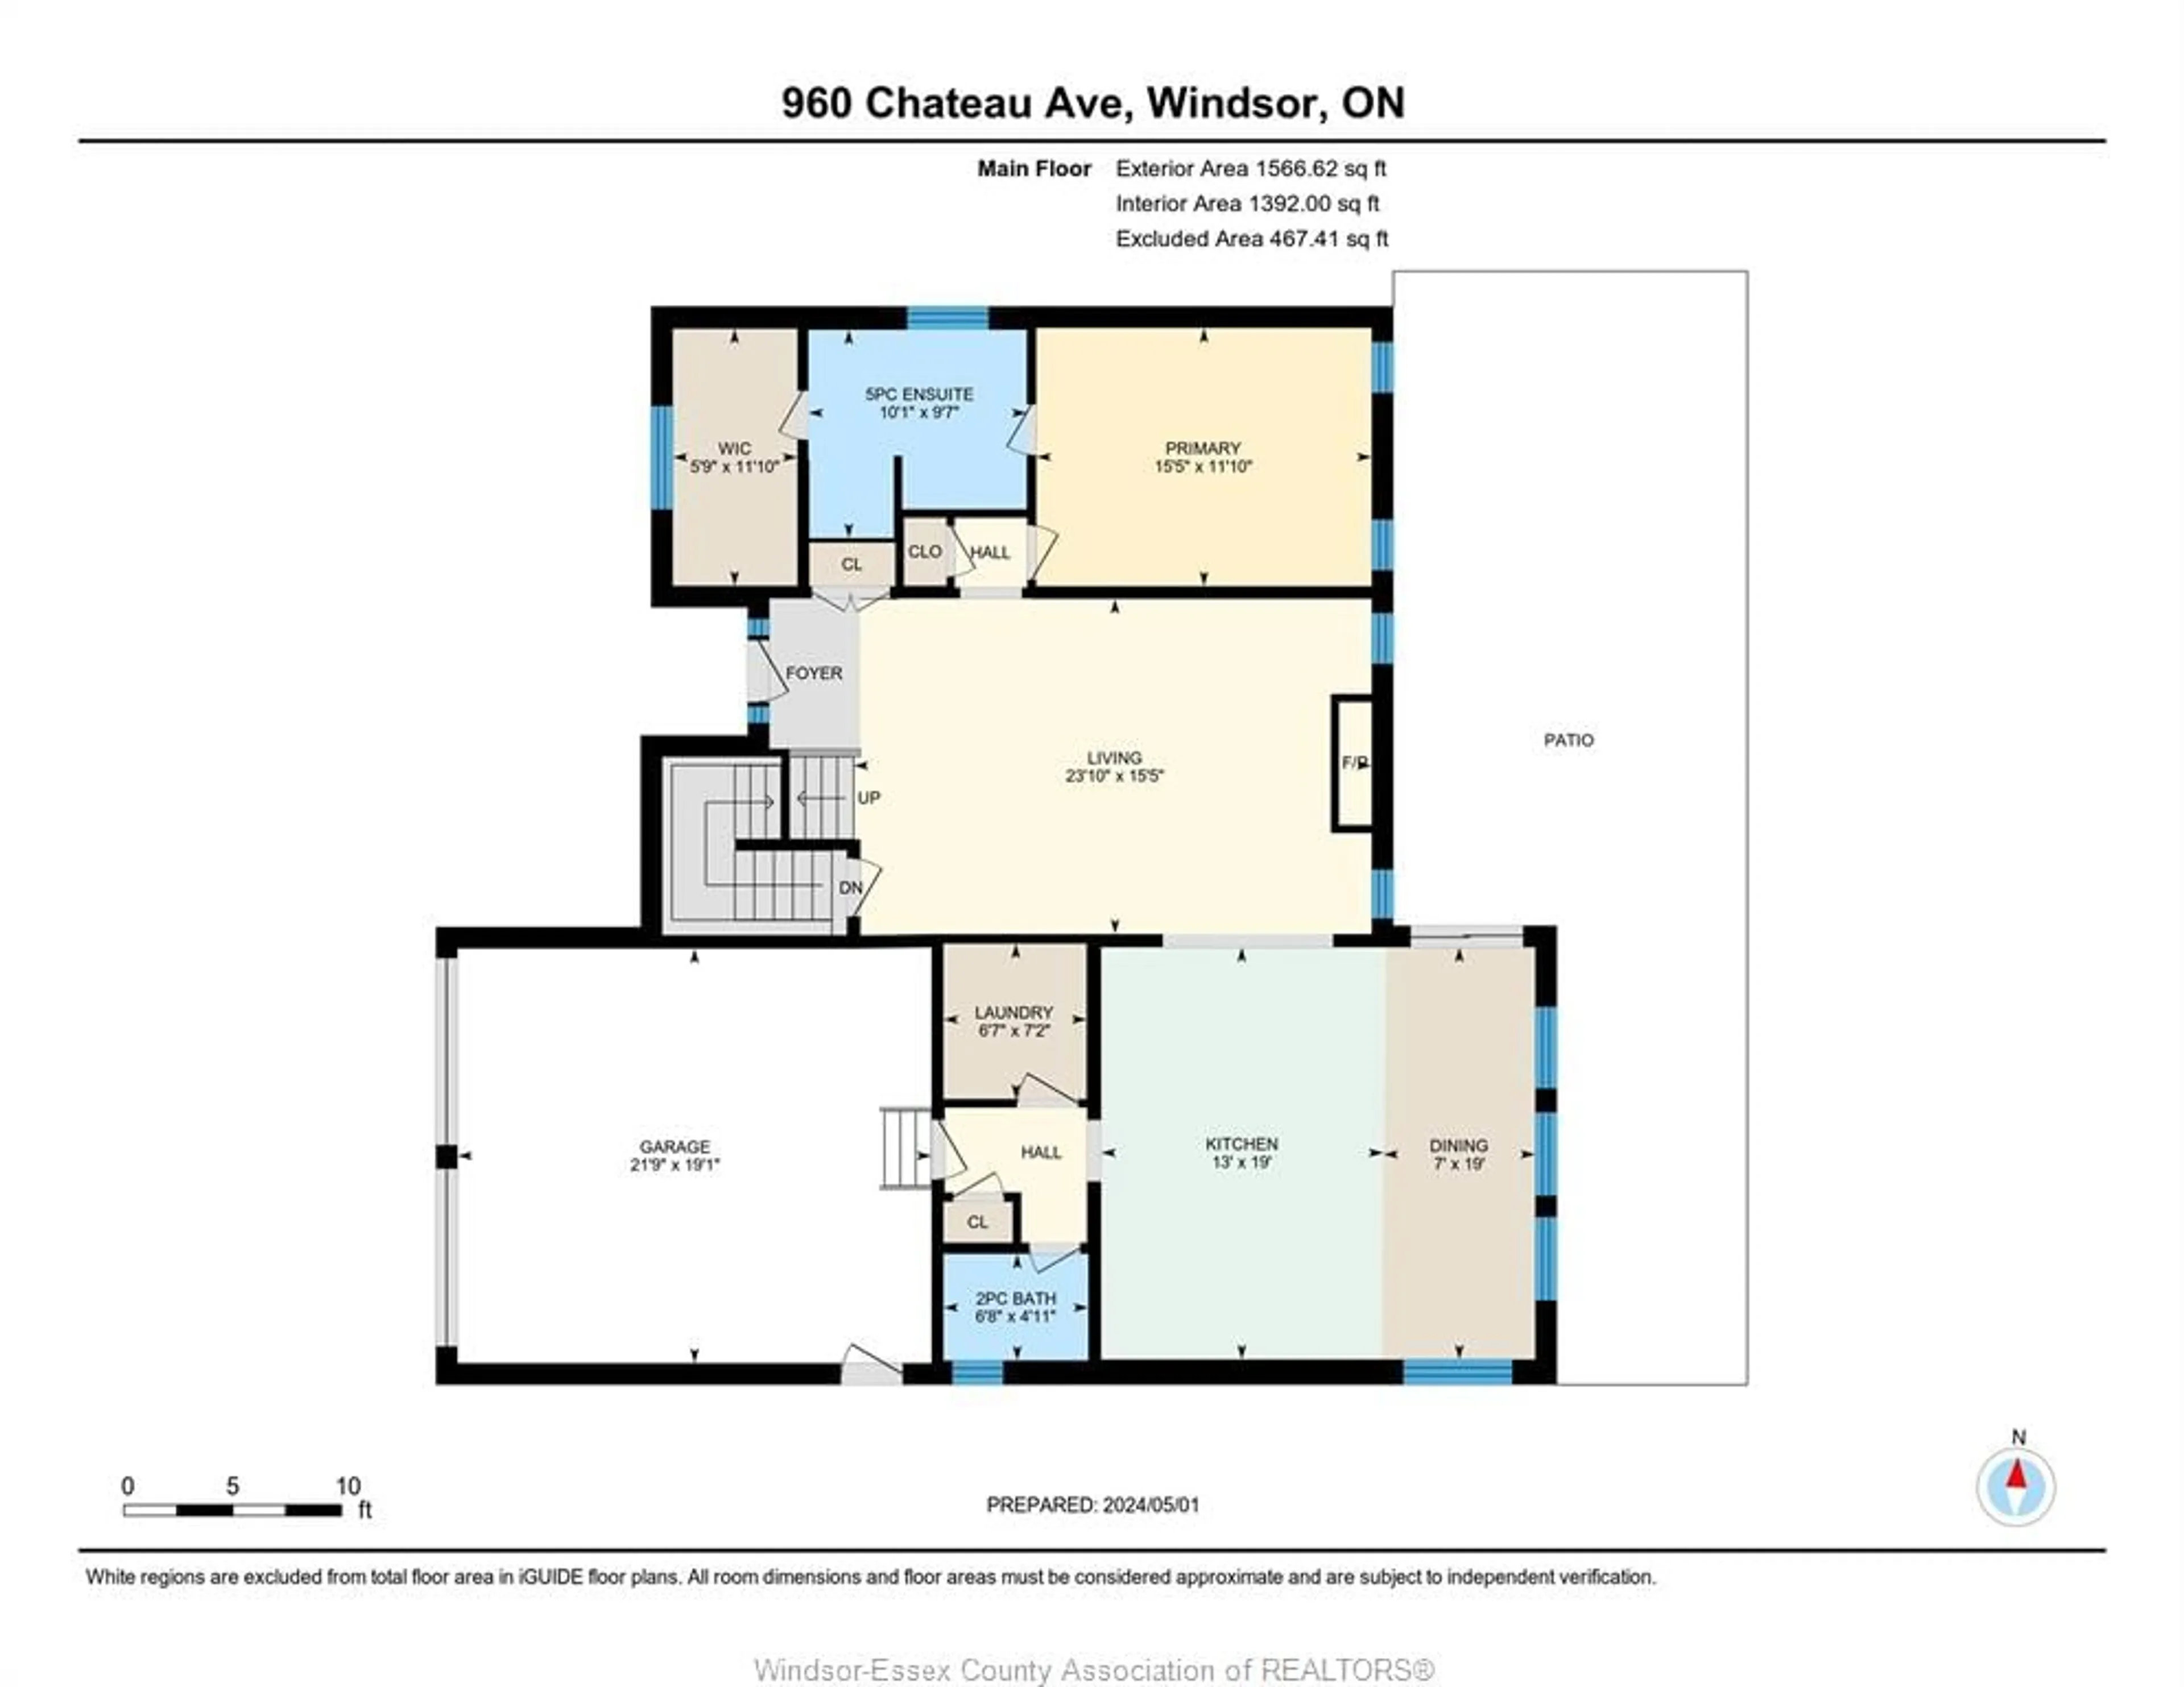 Floor plan for 960 CHATEAU, Windsor Ontario N8P 1L9